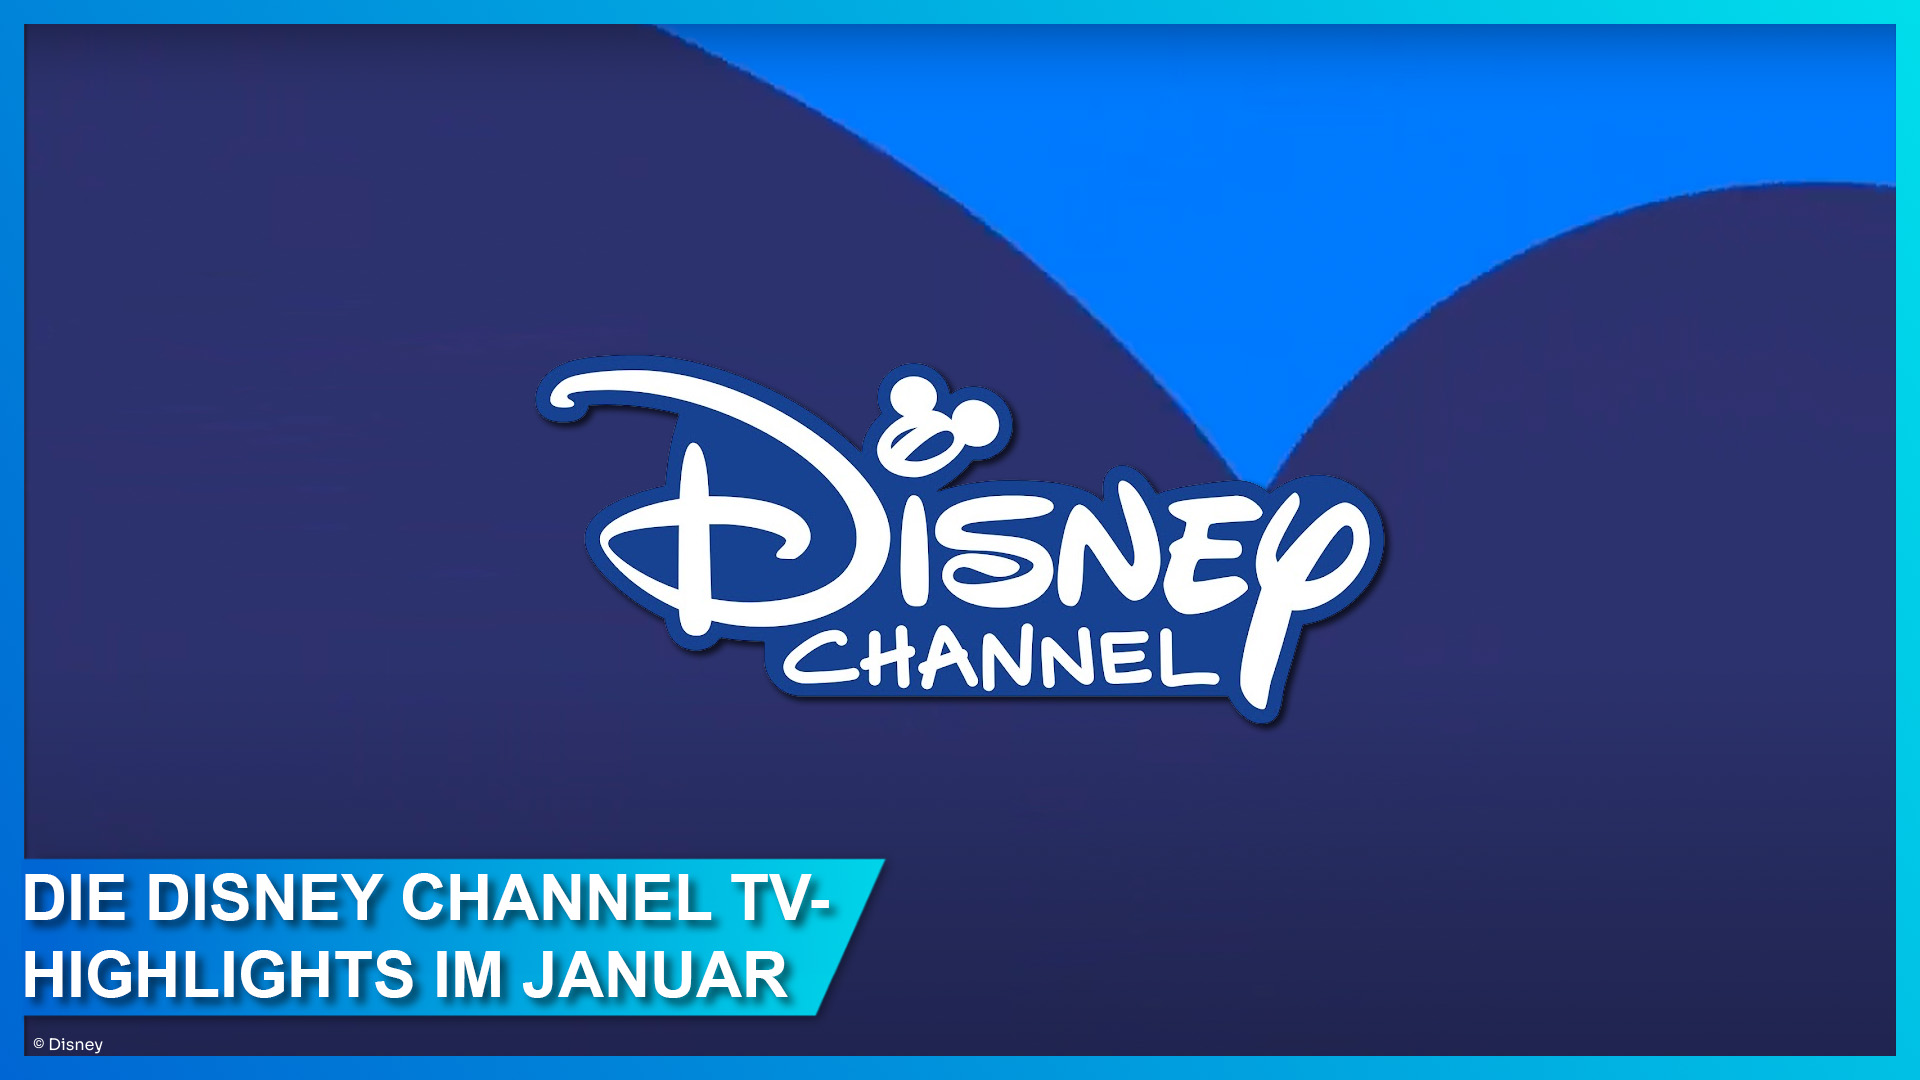 Die Disney Channel Film- & Serien-Highlights im Januar 2023 |  DisneyCentral.de